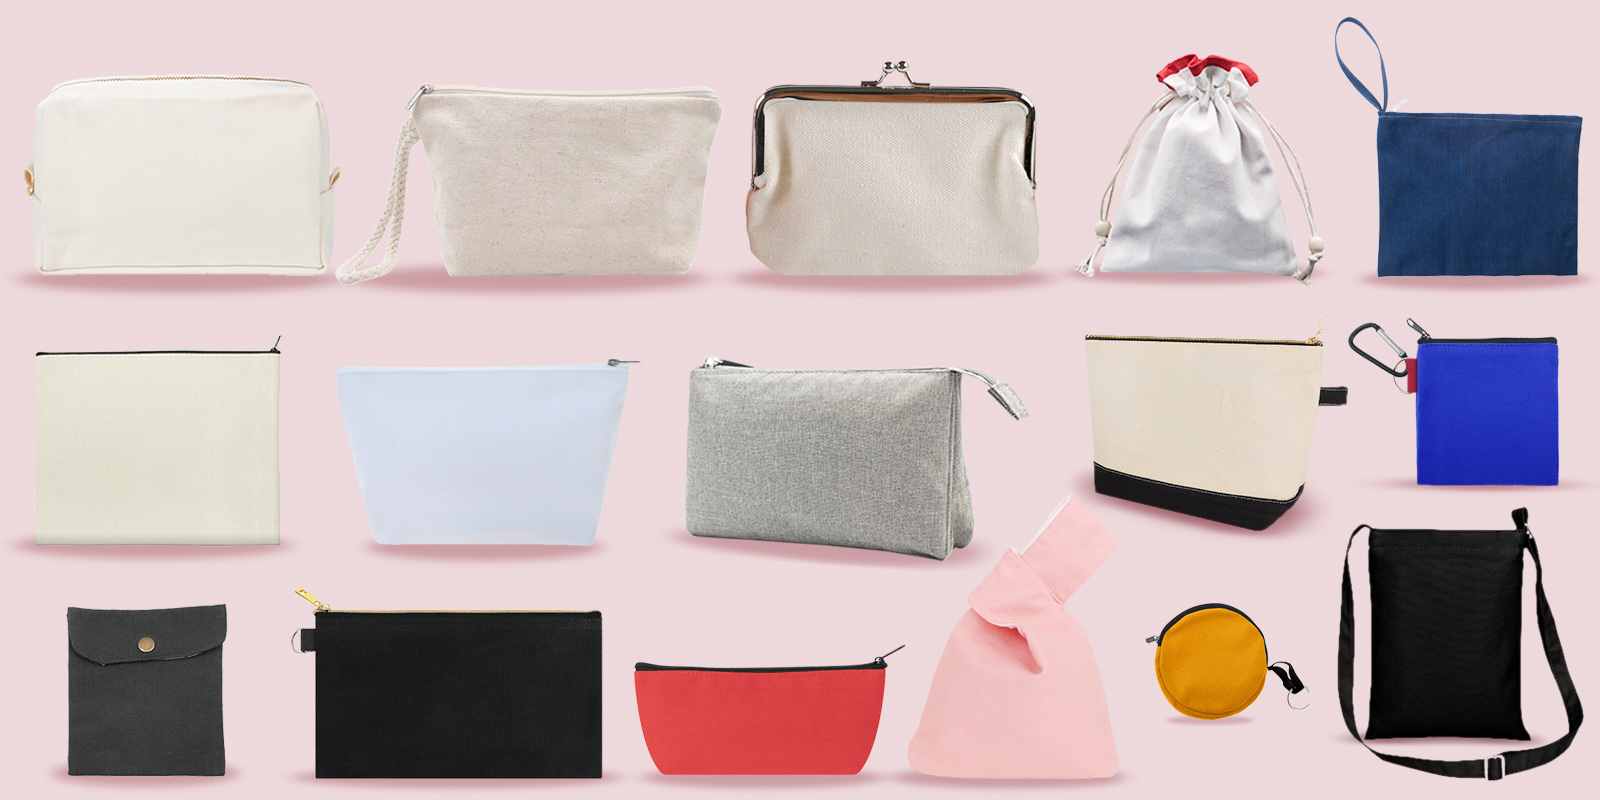 Custom Cuboid Shape 100% Cotton Makeup Bag, 7 x 4 x 3 Inches Travel Cosmetic Organizer